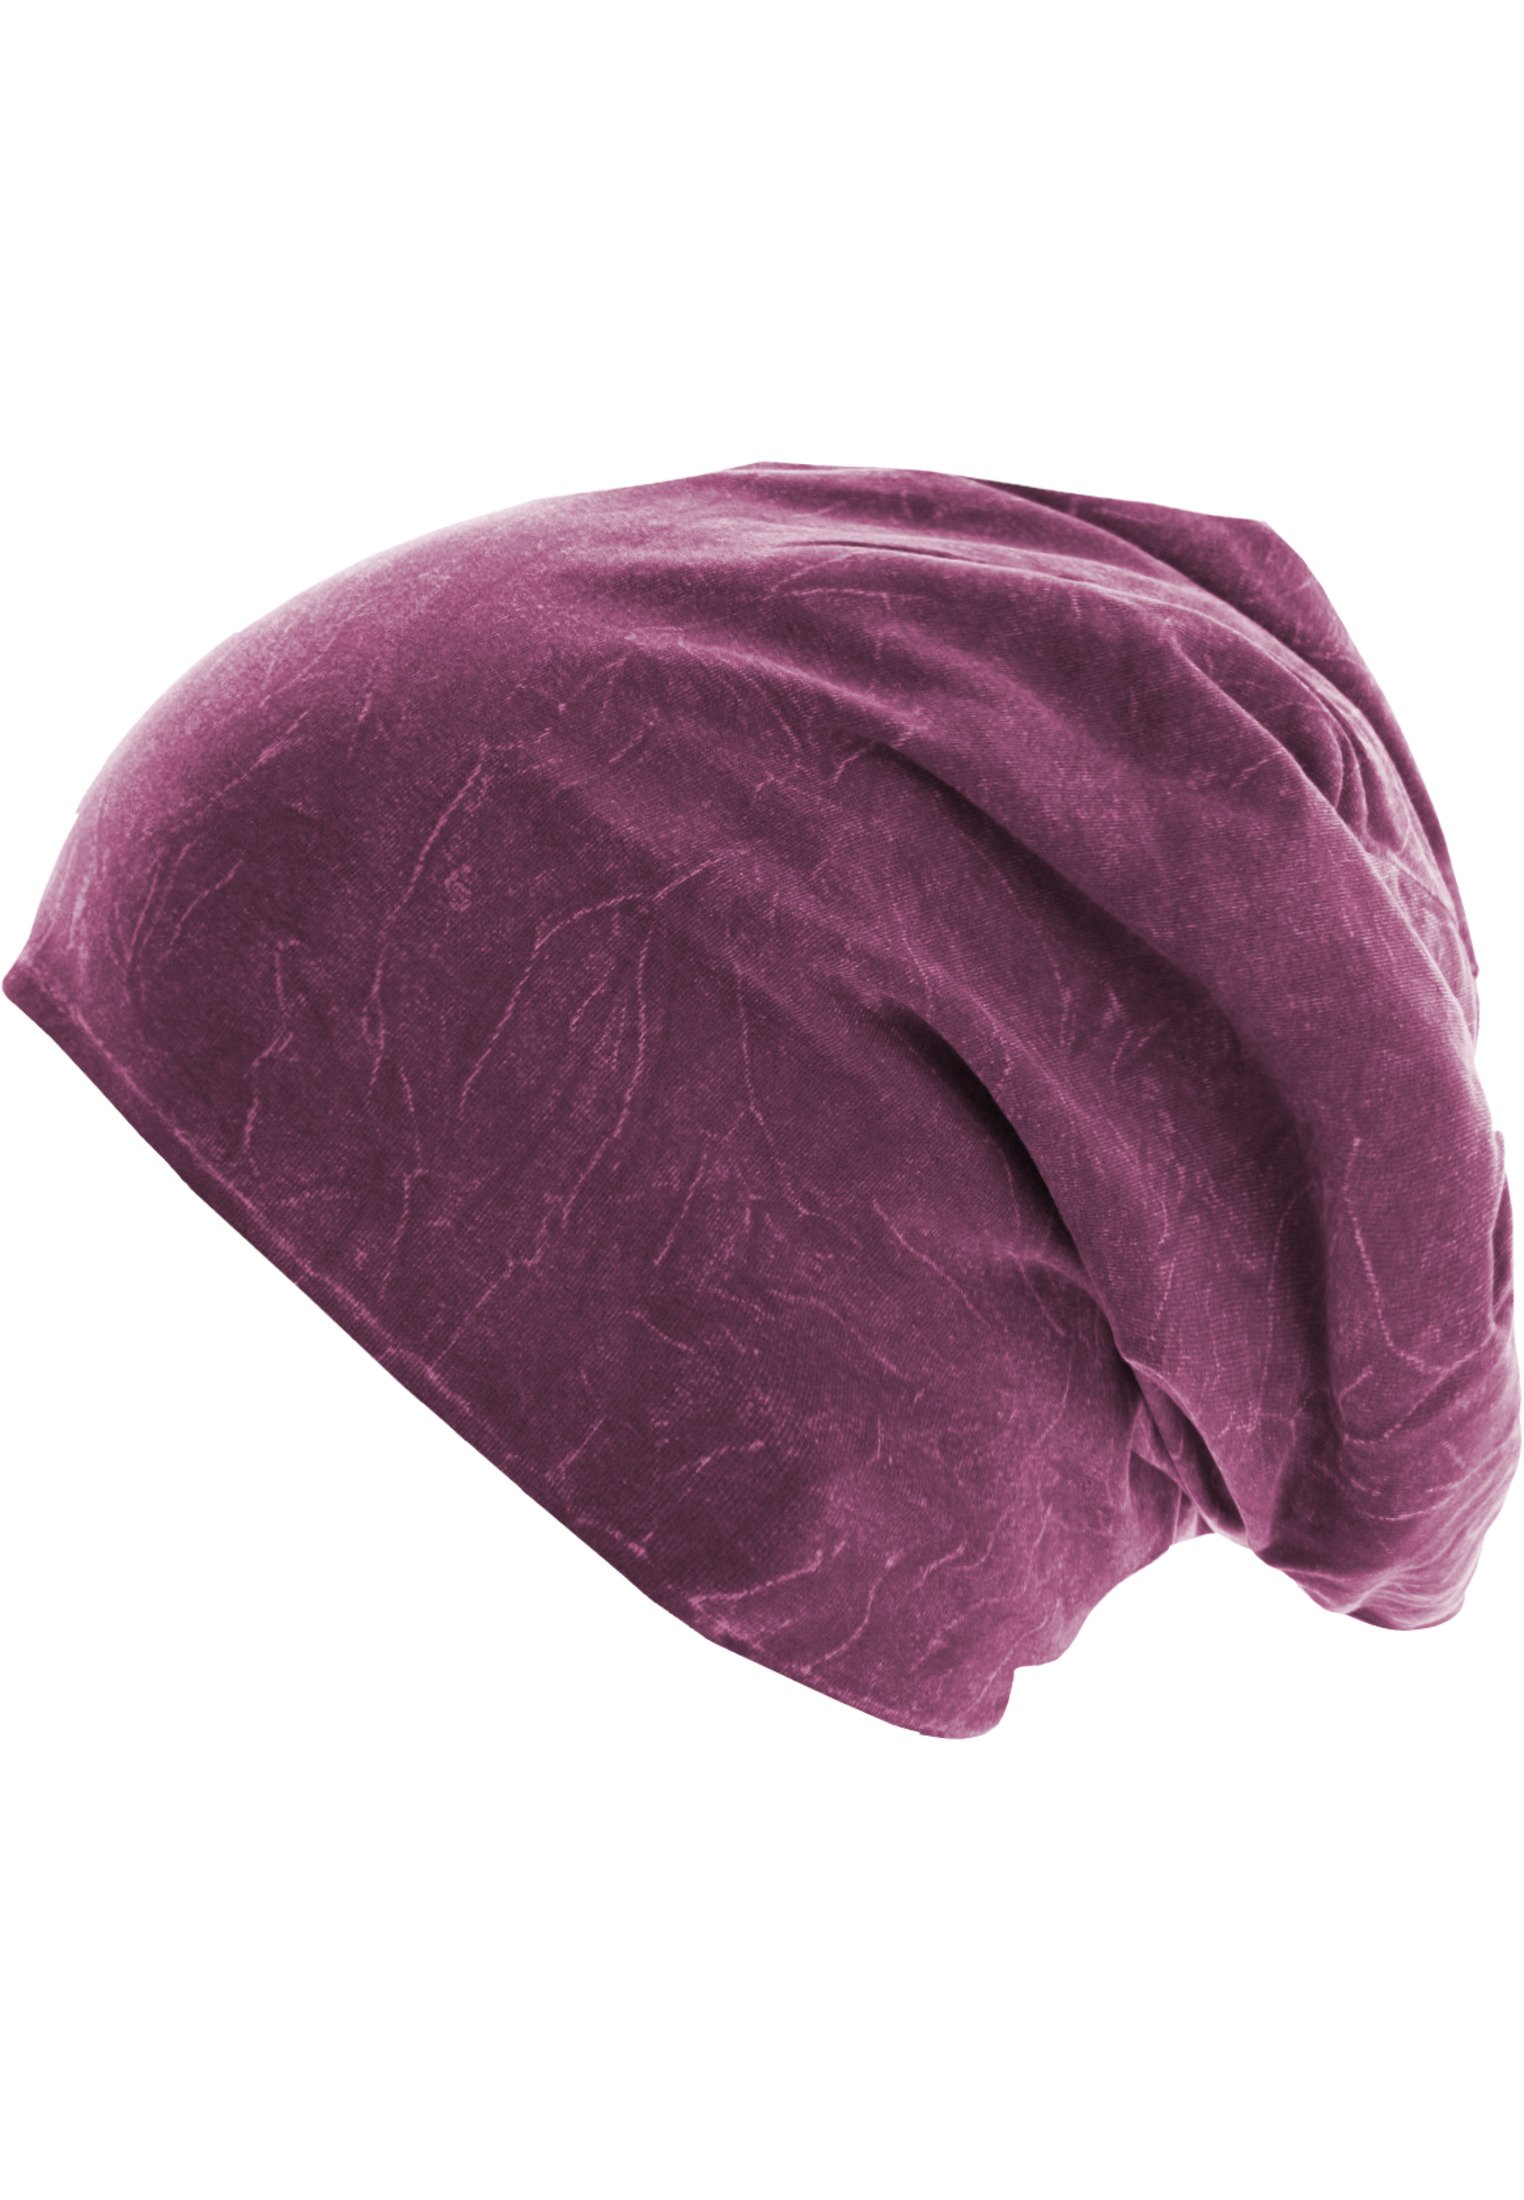 Stonewashed Jersey Beanie purple one size